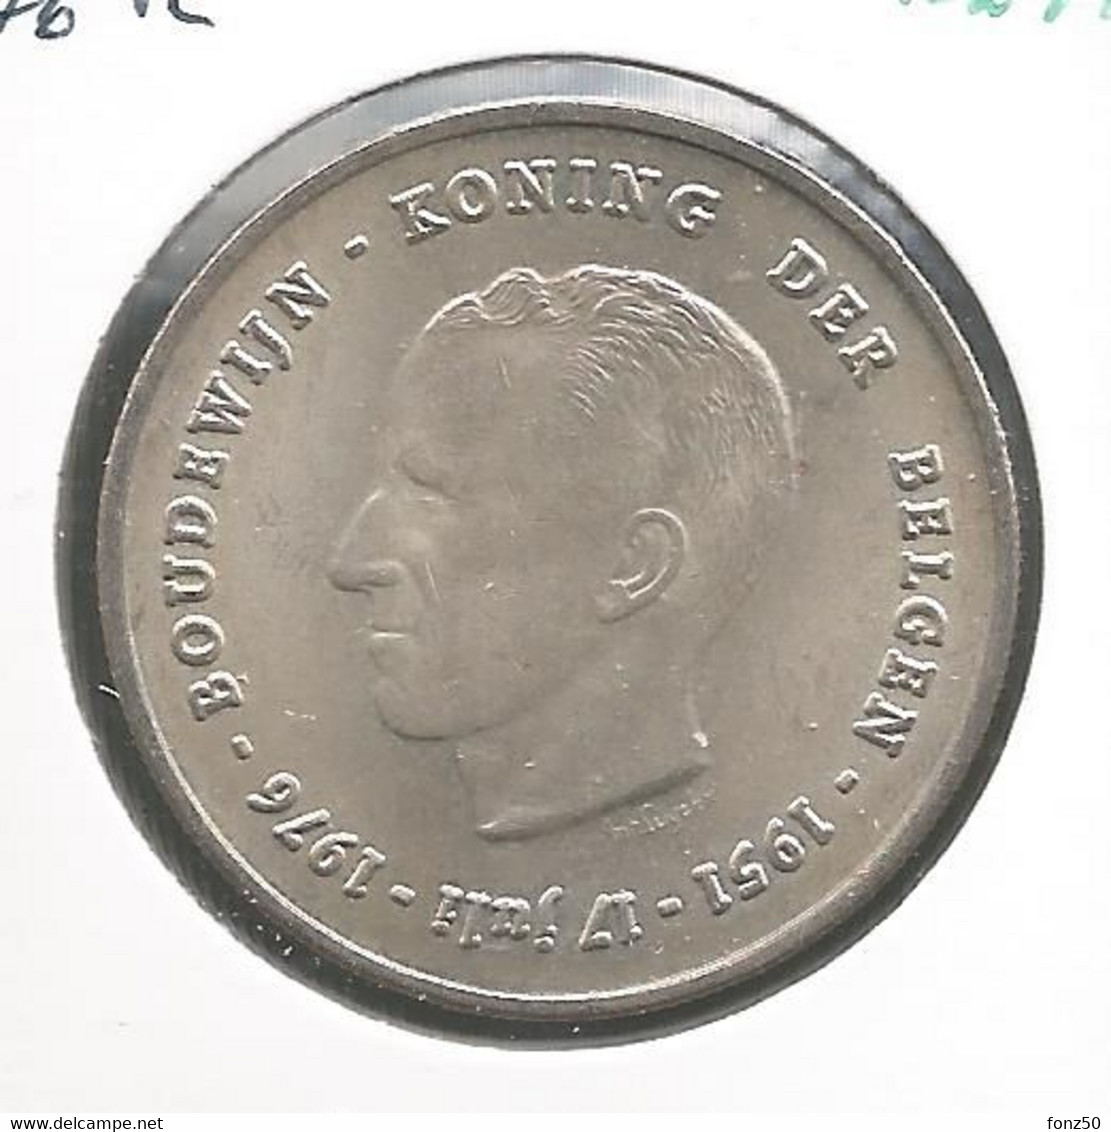 BOUDEWIJN * 250 Frank 1976 Vlaams * Nr 12244 - 250 Francs